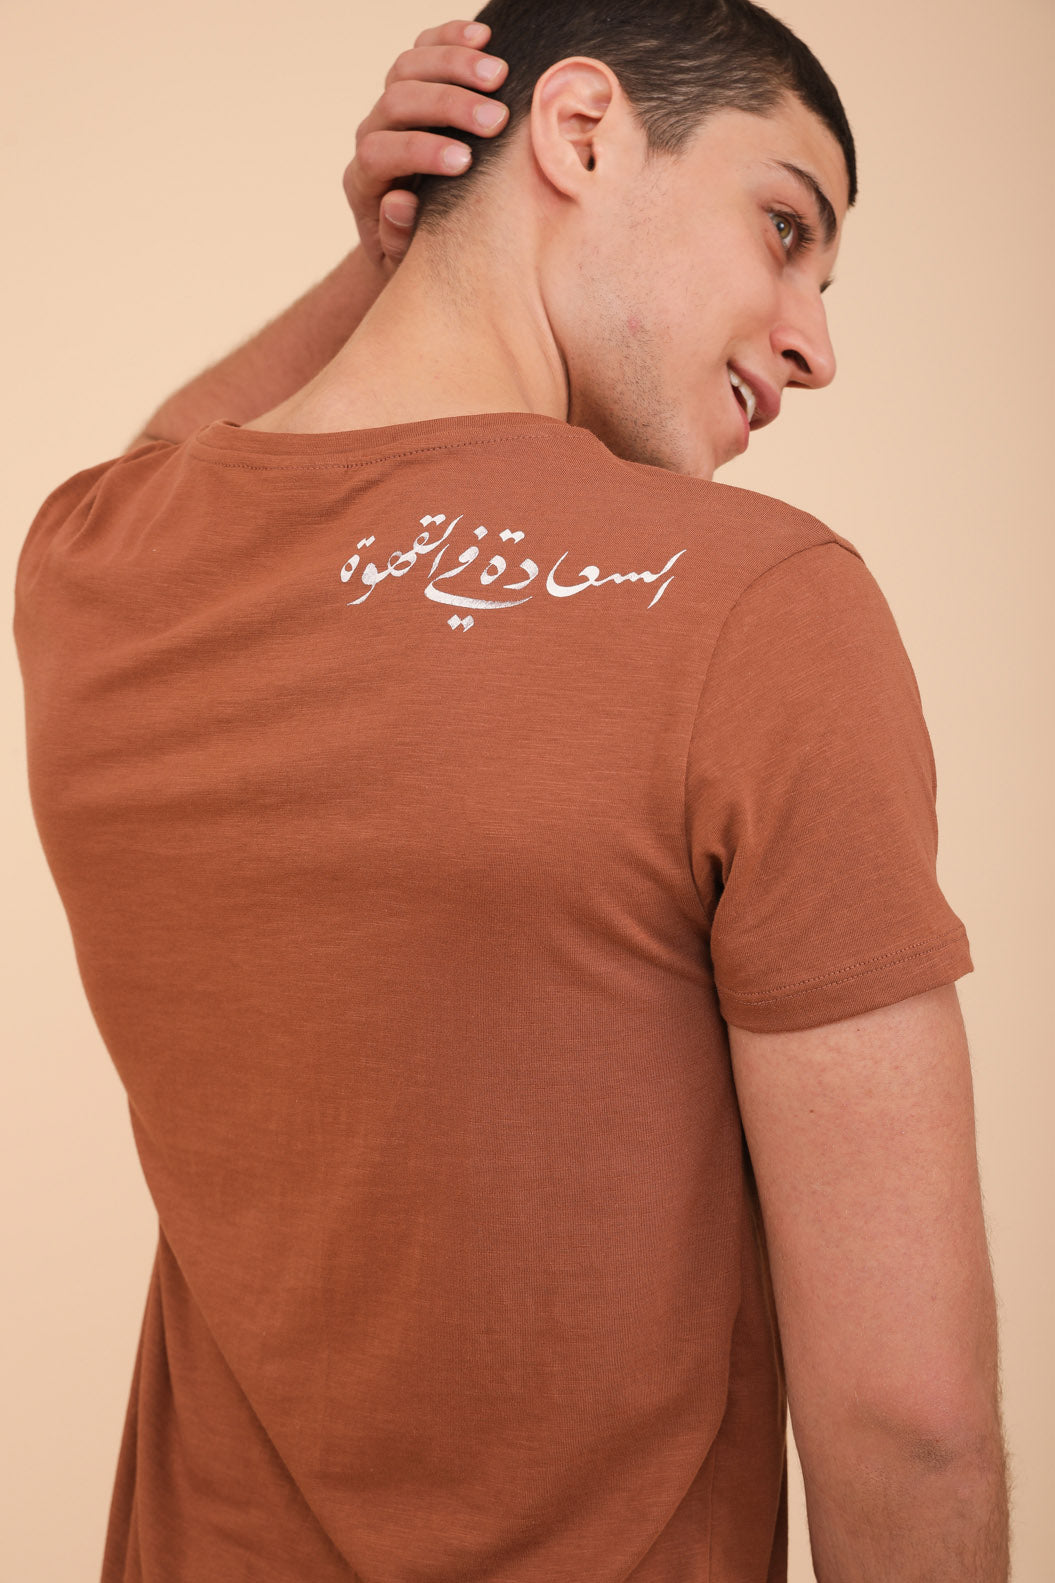 T-shirt Felicita by LYOUM ; iconic, Mediterranean lifestyle.